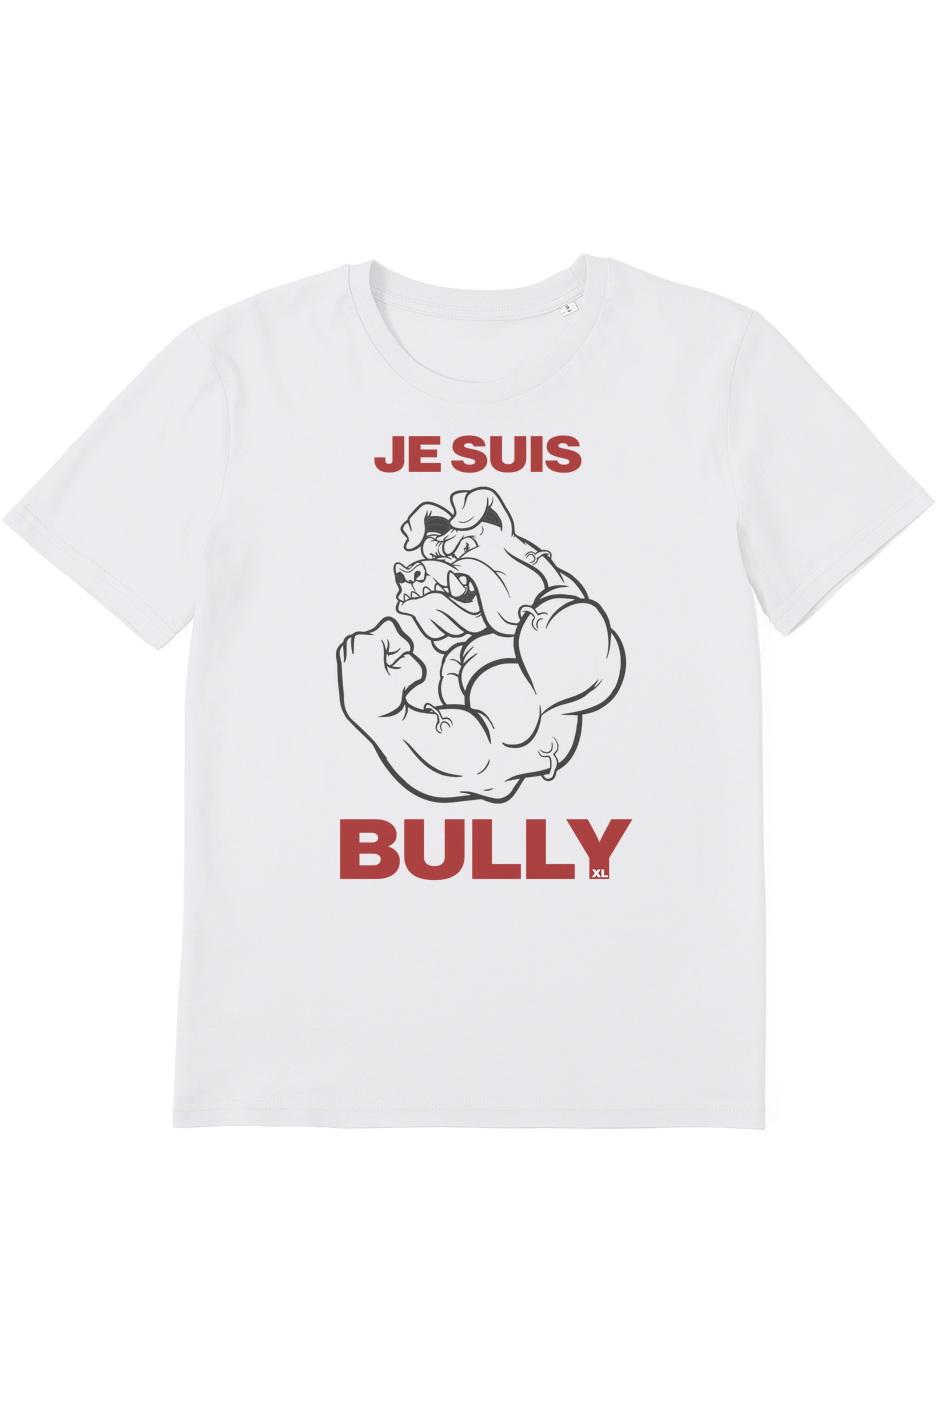 Je Suis Bully Organic T-Shirt vegan, sustainable, organic streetwear, - TRVTH ORGANIC CLOTHING